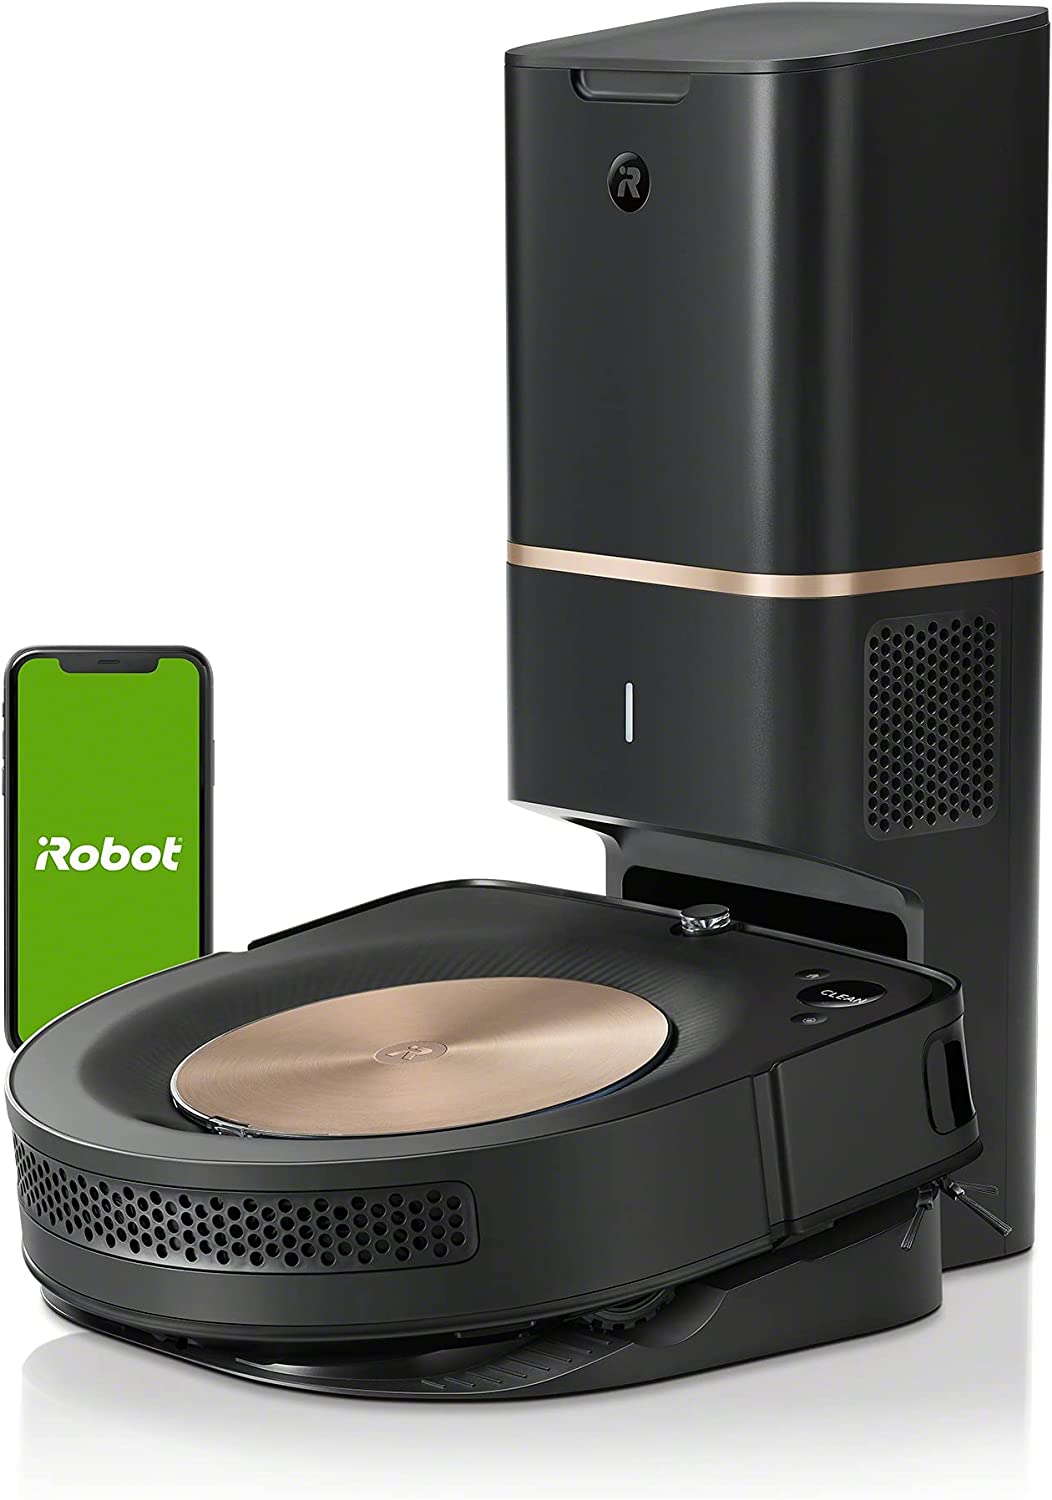 Roomba s9+ vs Roomba i7+ vs Roomba j7+